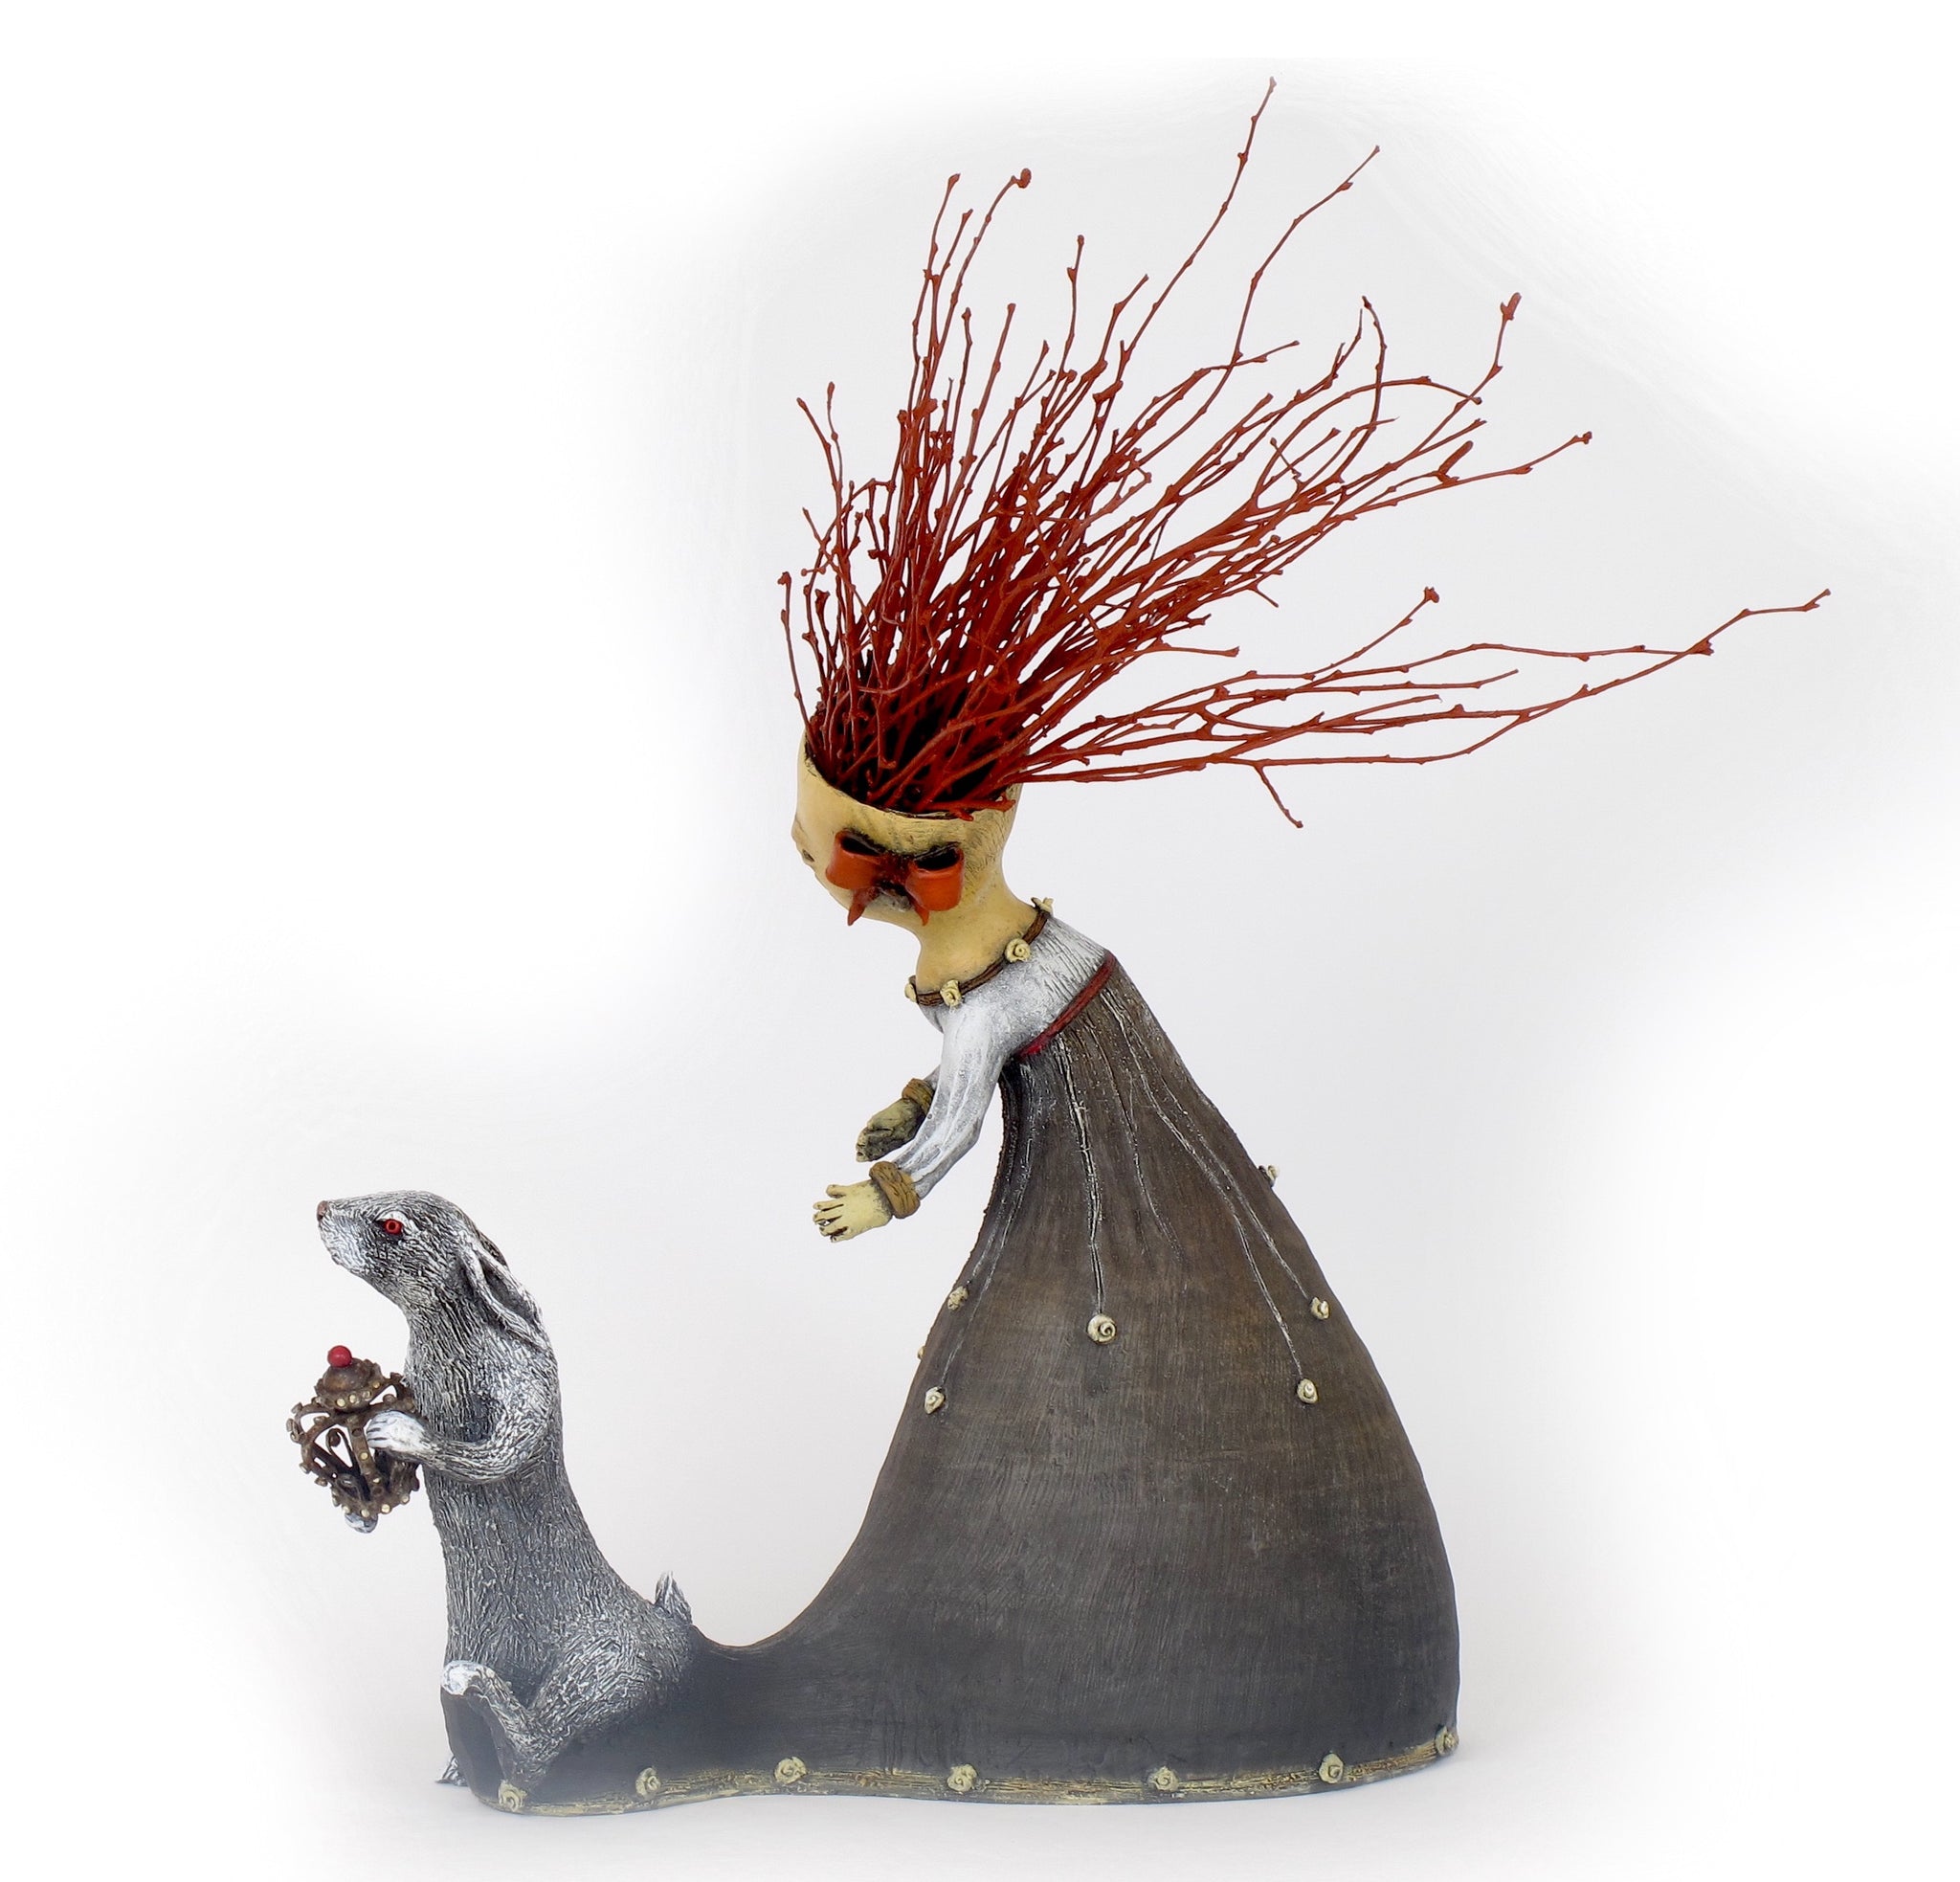 SOLD   "White Rabbit Steals the Jeweled Crown" original ceramic sculpture by Jacquline Hurlbert